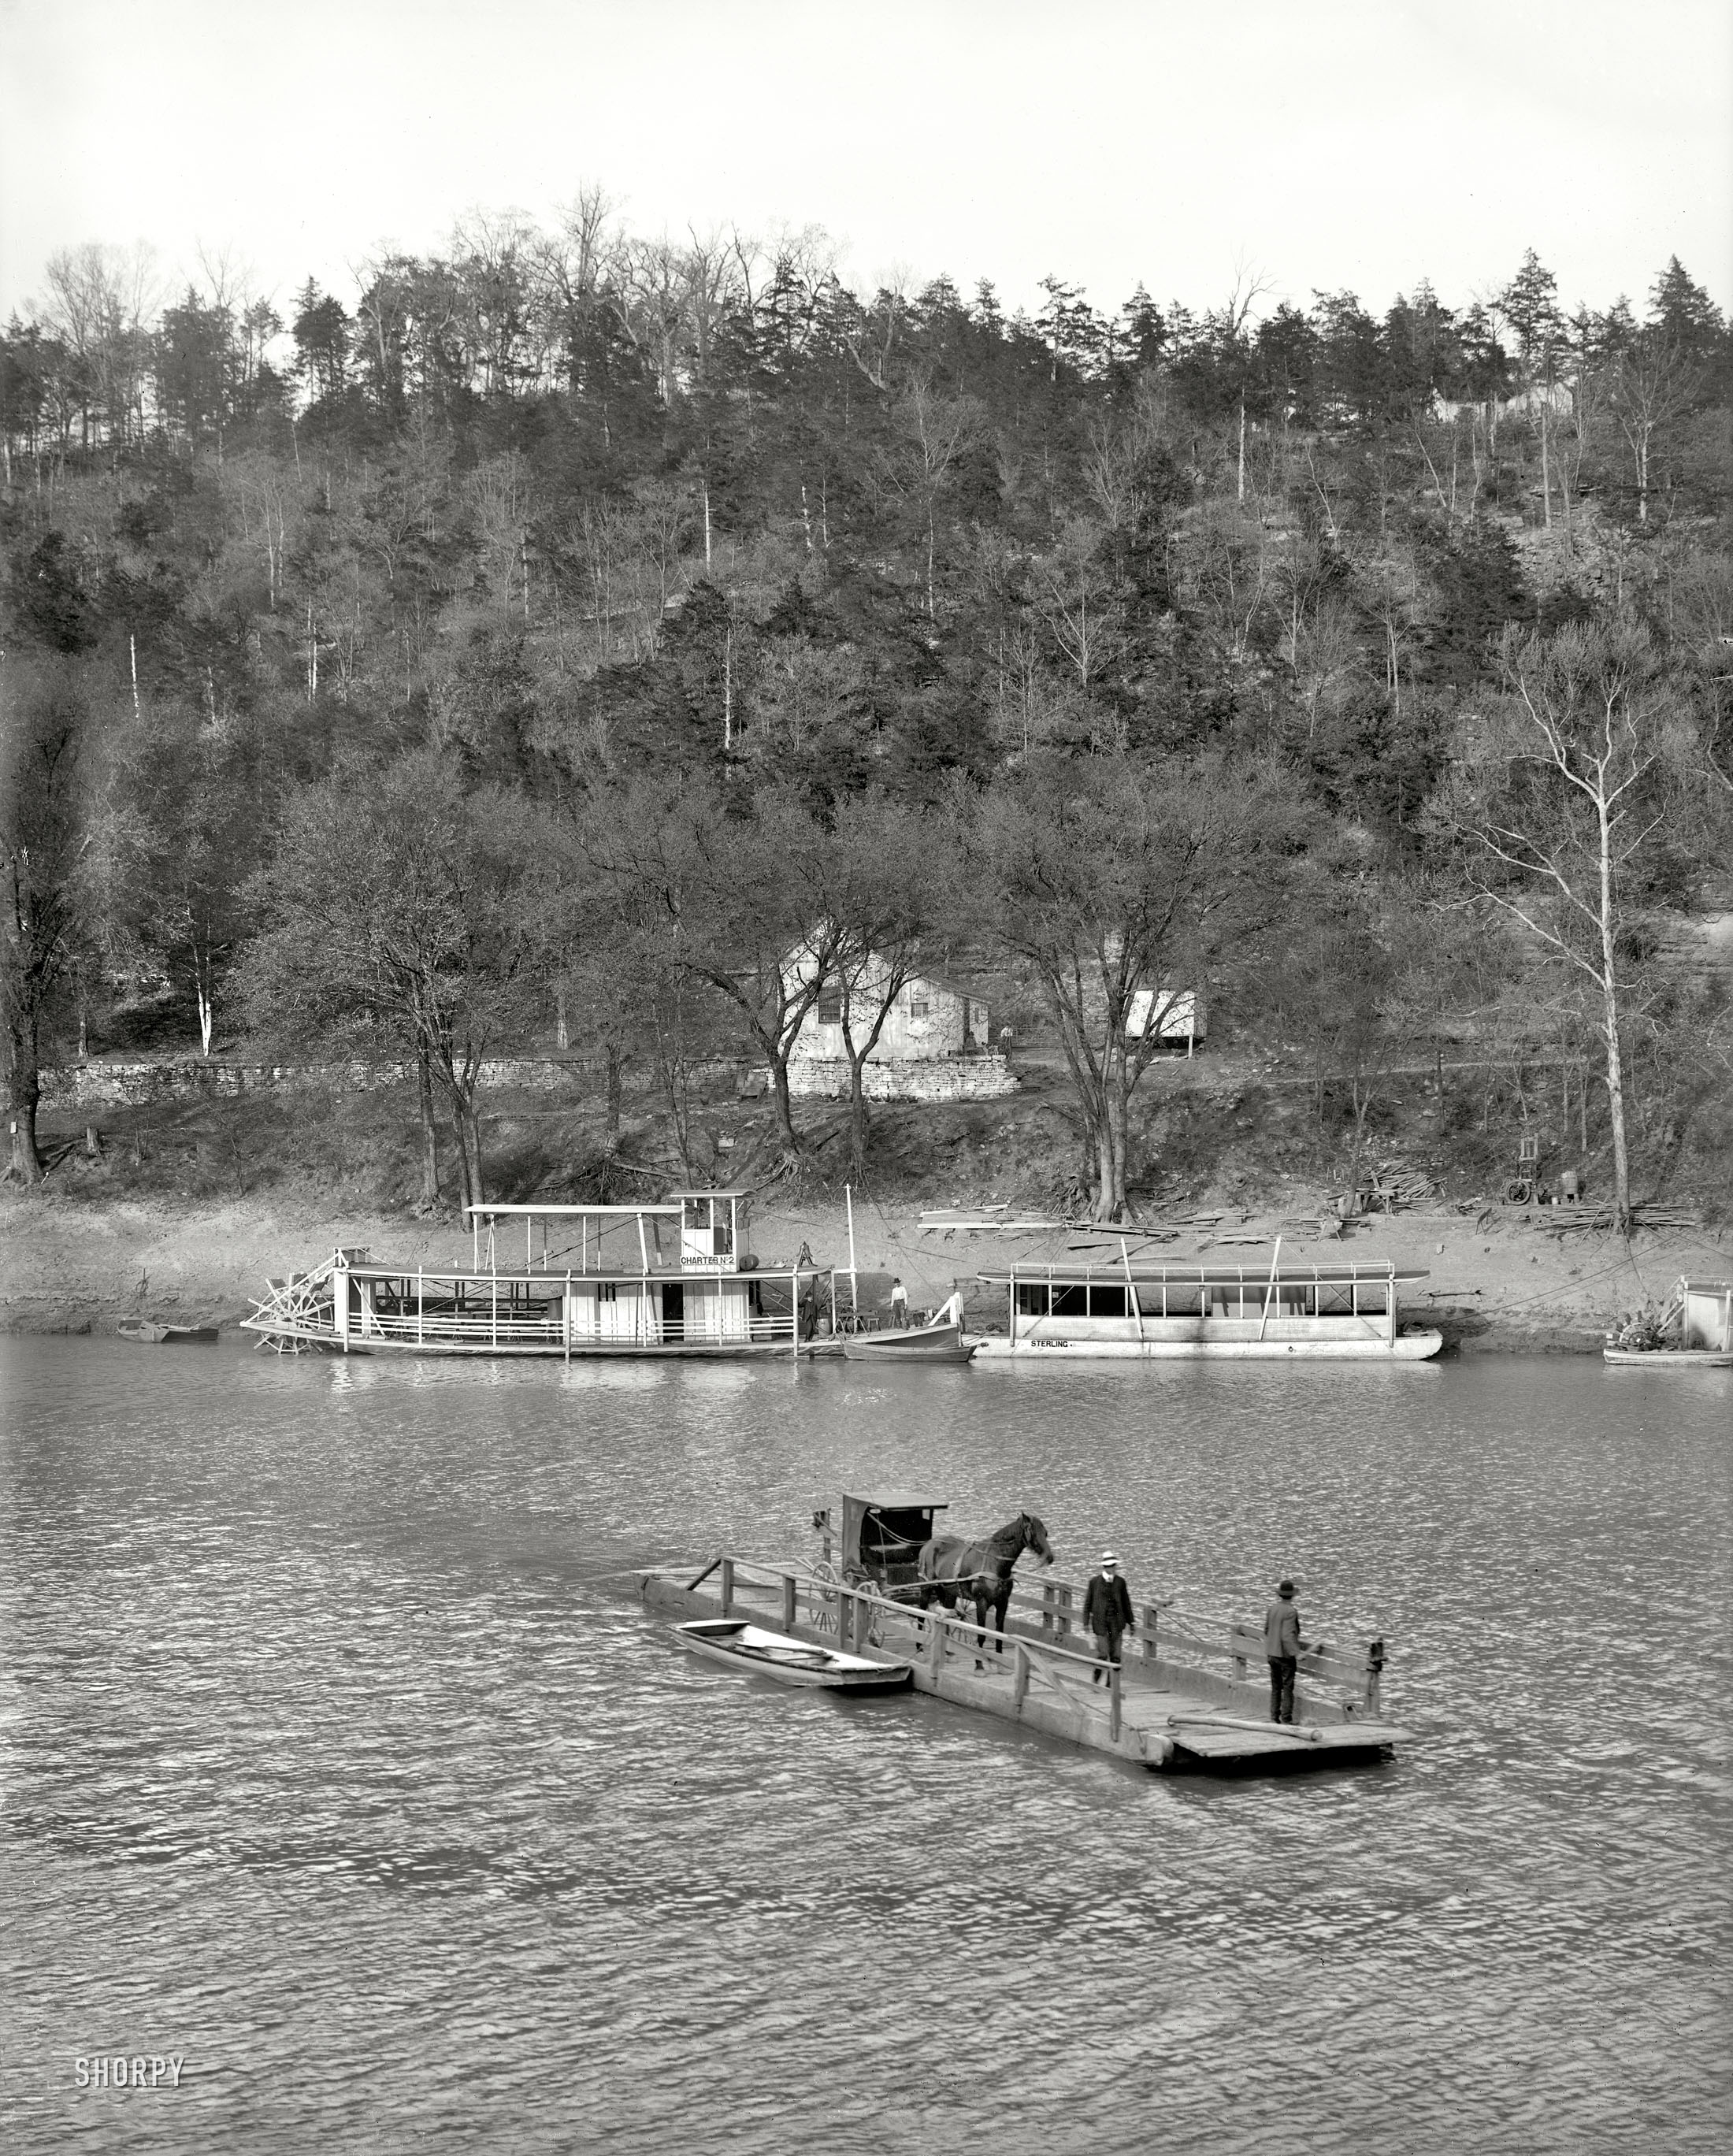 Circa 1907. "Primitive ferry, High Bridge, Kentucky River." 8x10 inch dry plate glass negative, Detroit Publishing Company. View full size.